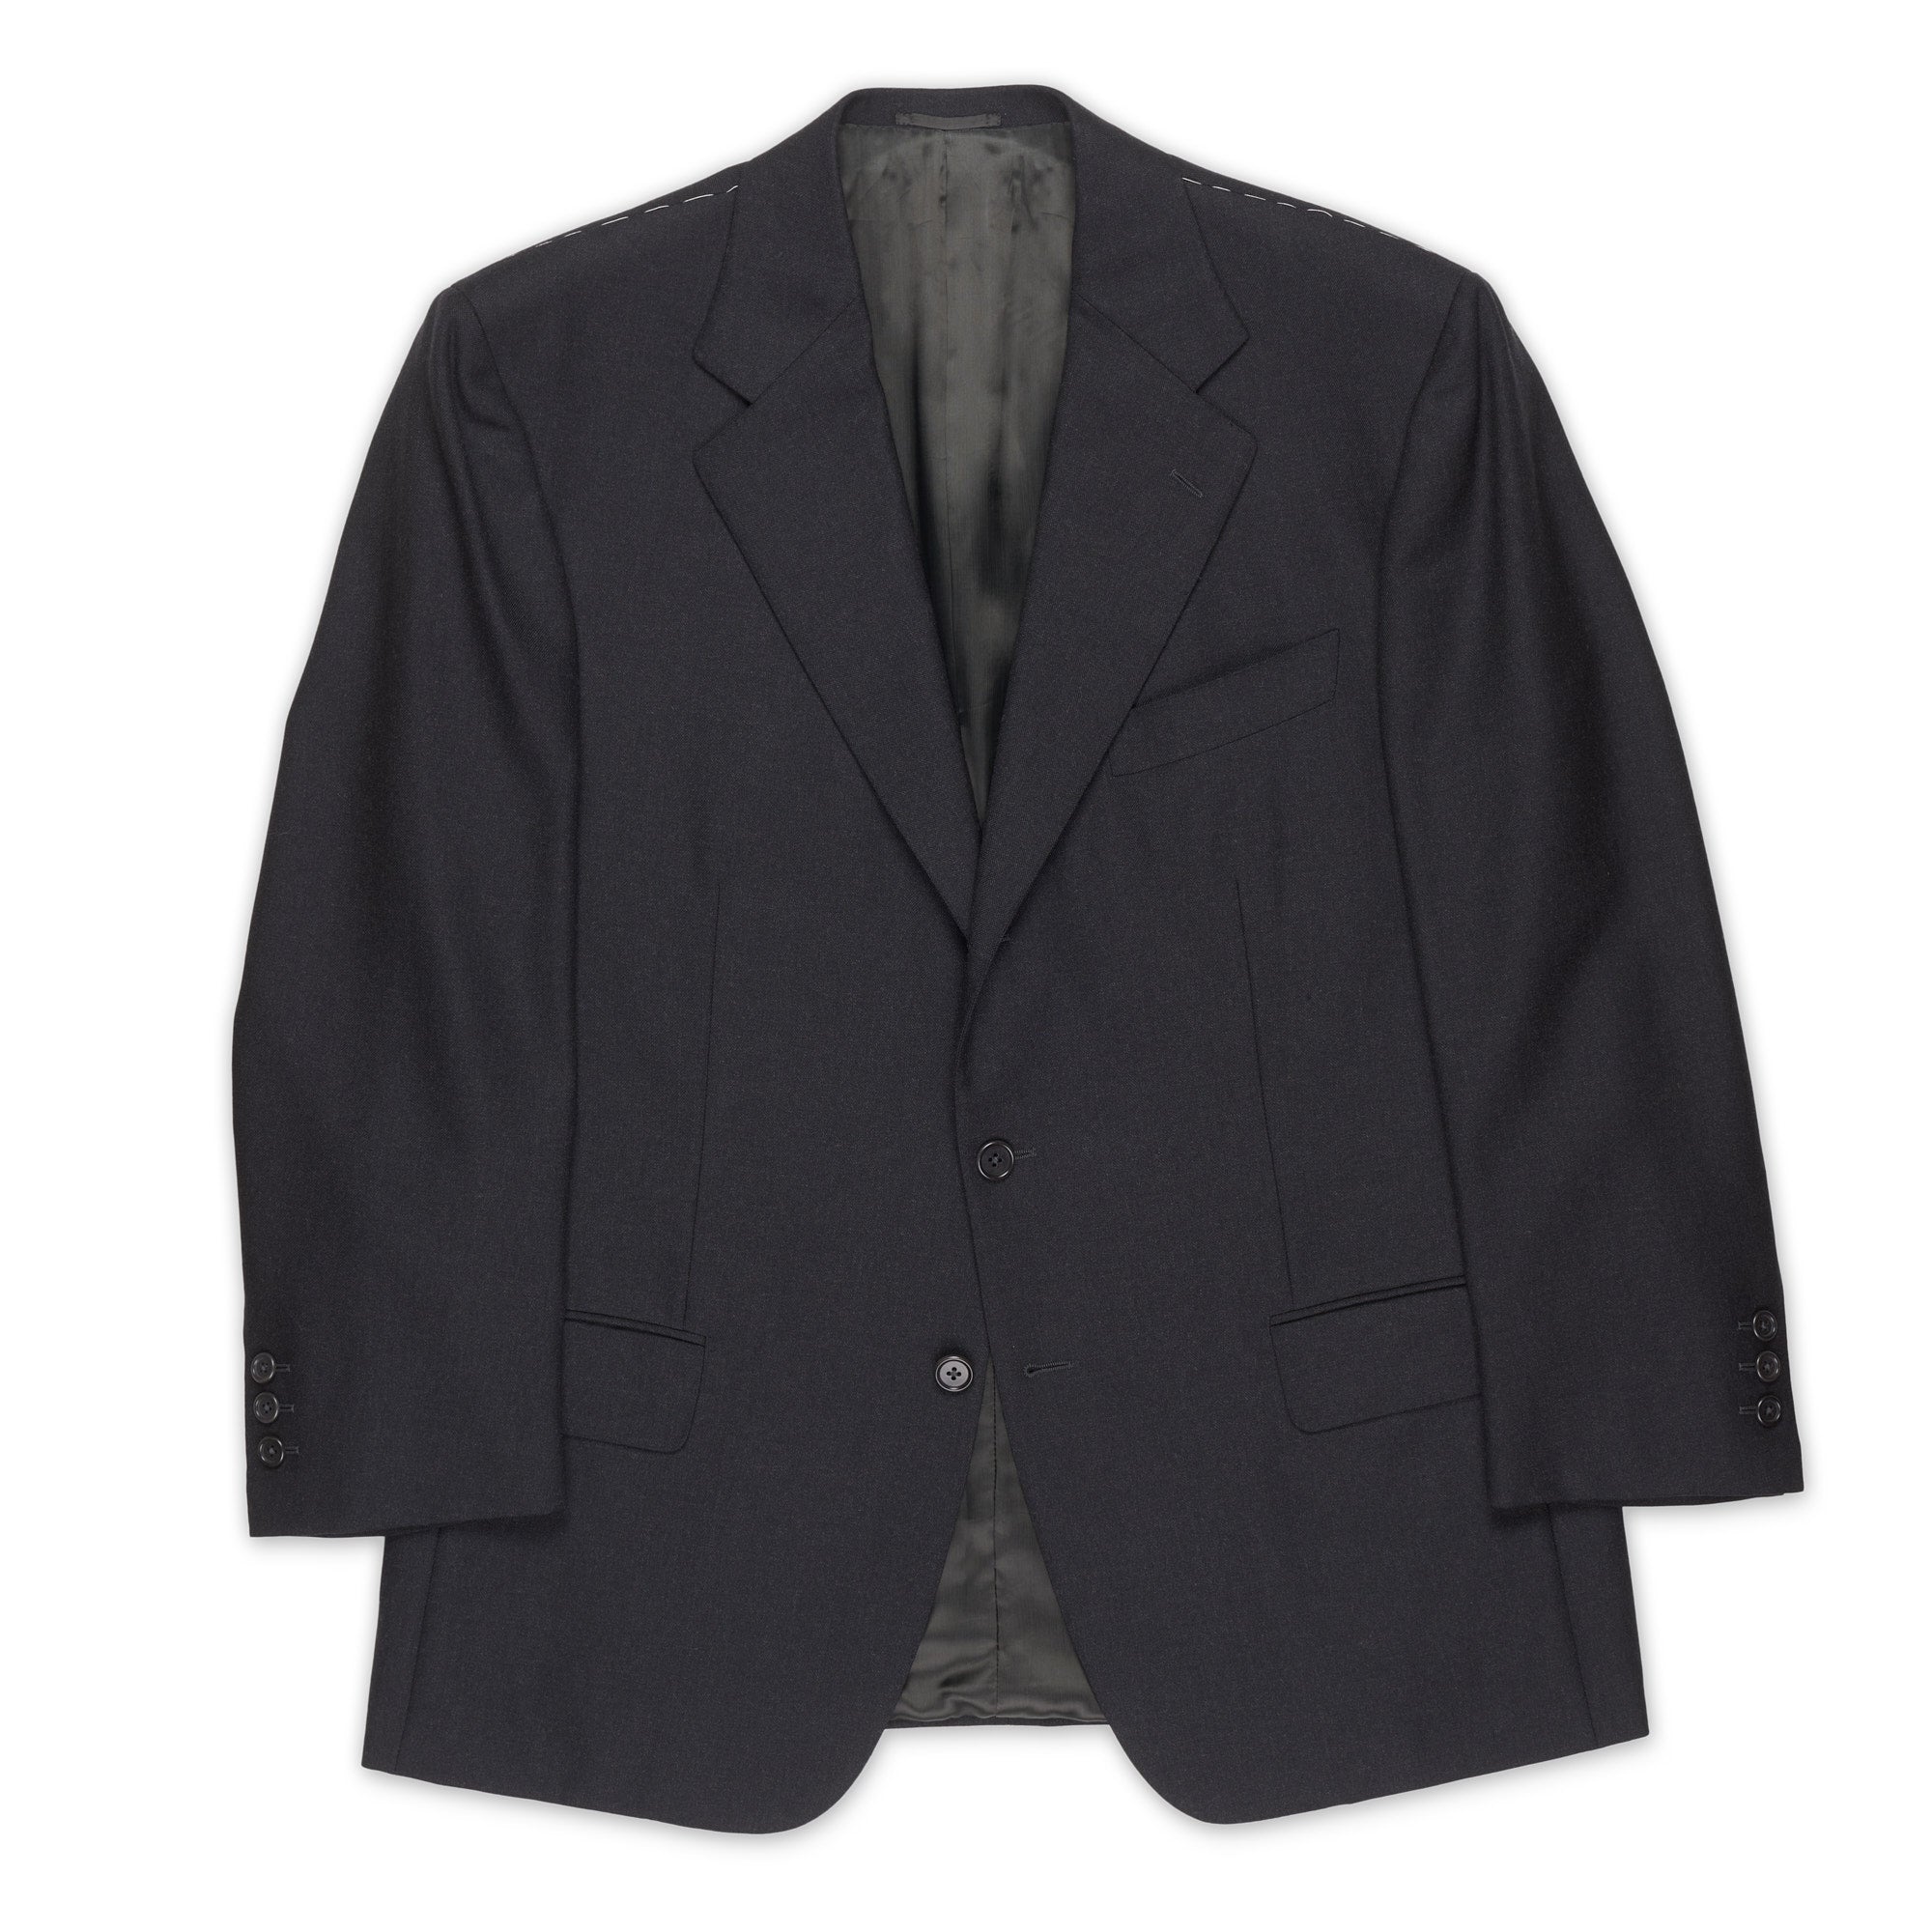 CASTANGIA 1850 Charcoal Gray Wool-Cashmere Jacket EU 54 NEW US 44 CASTANGIA